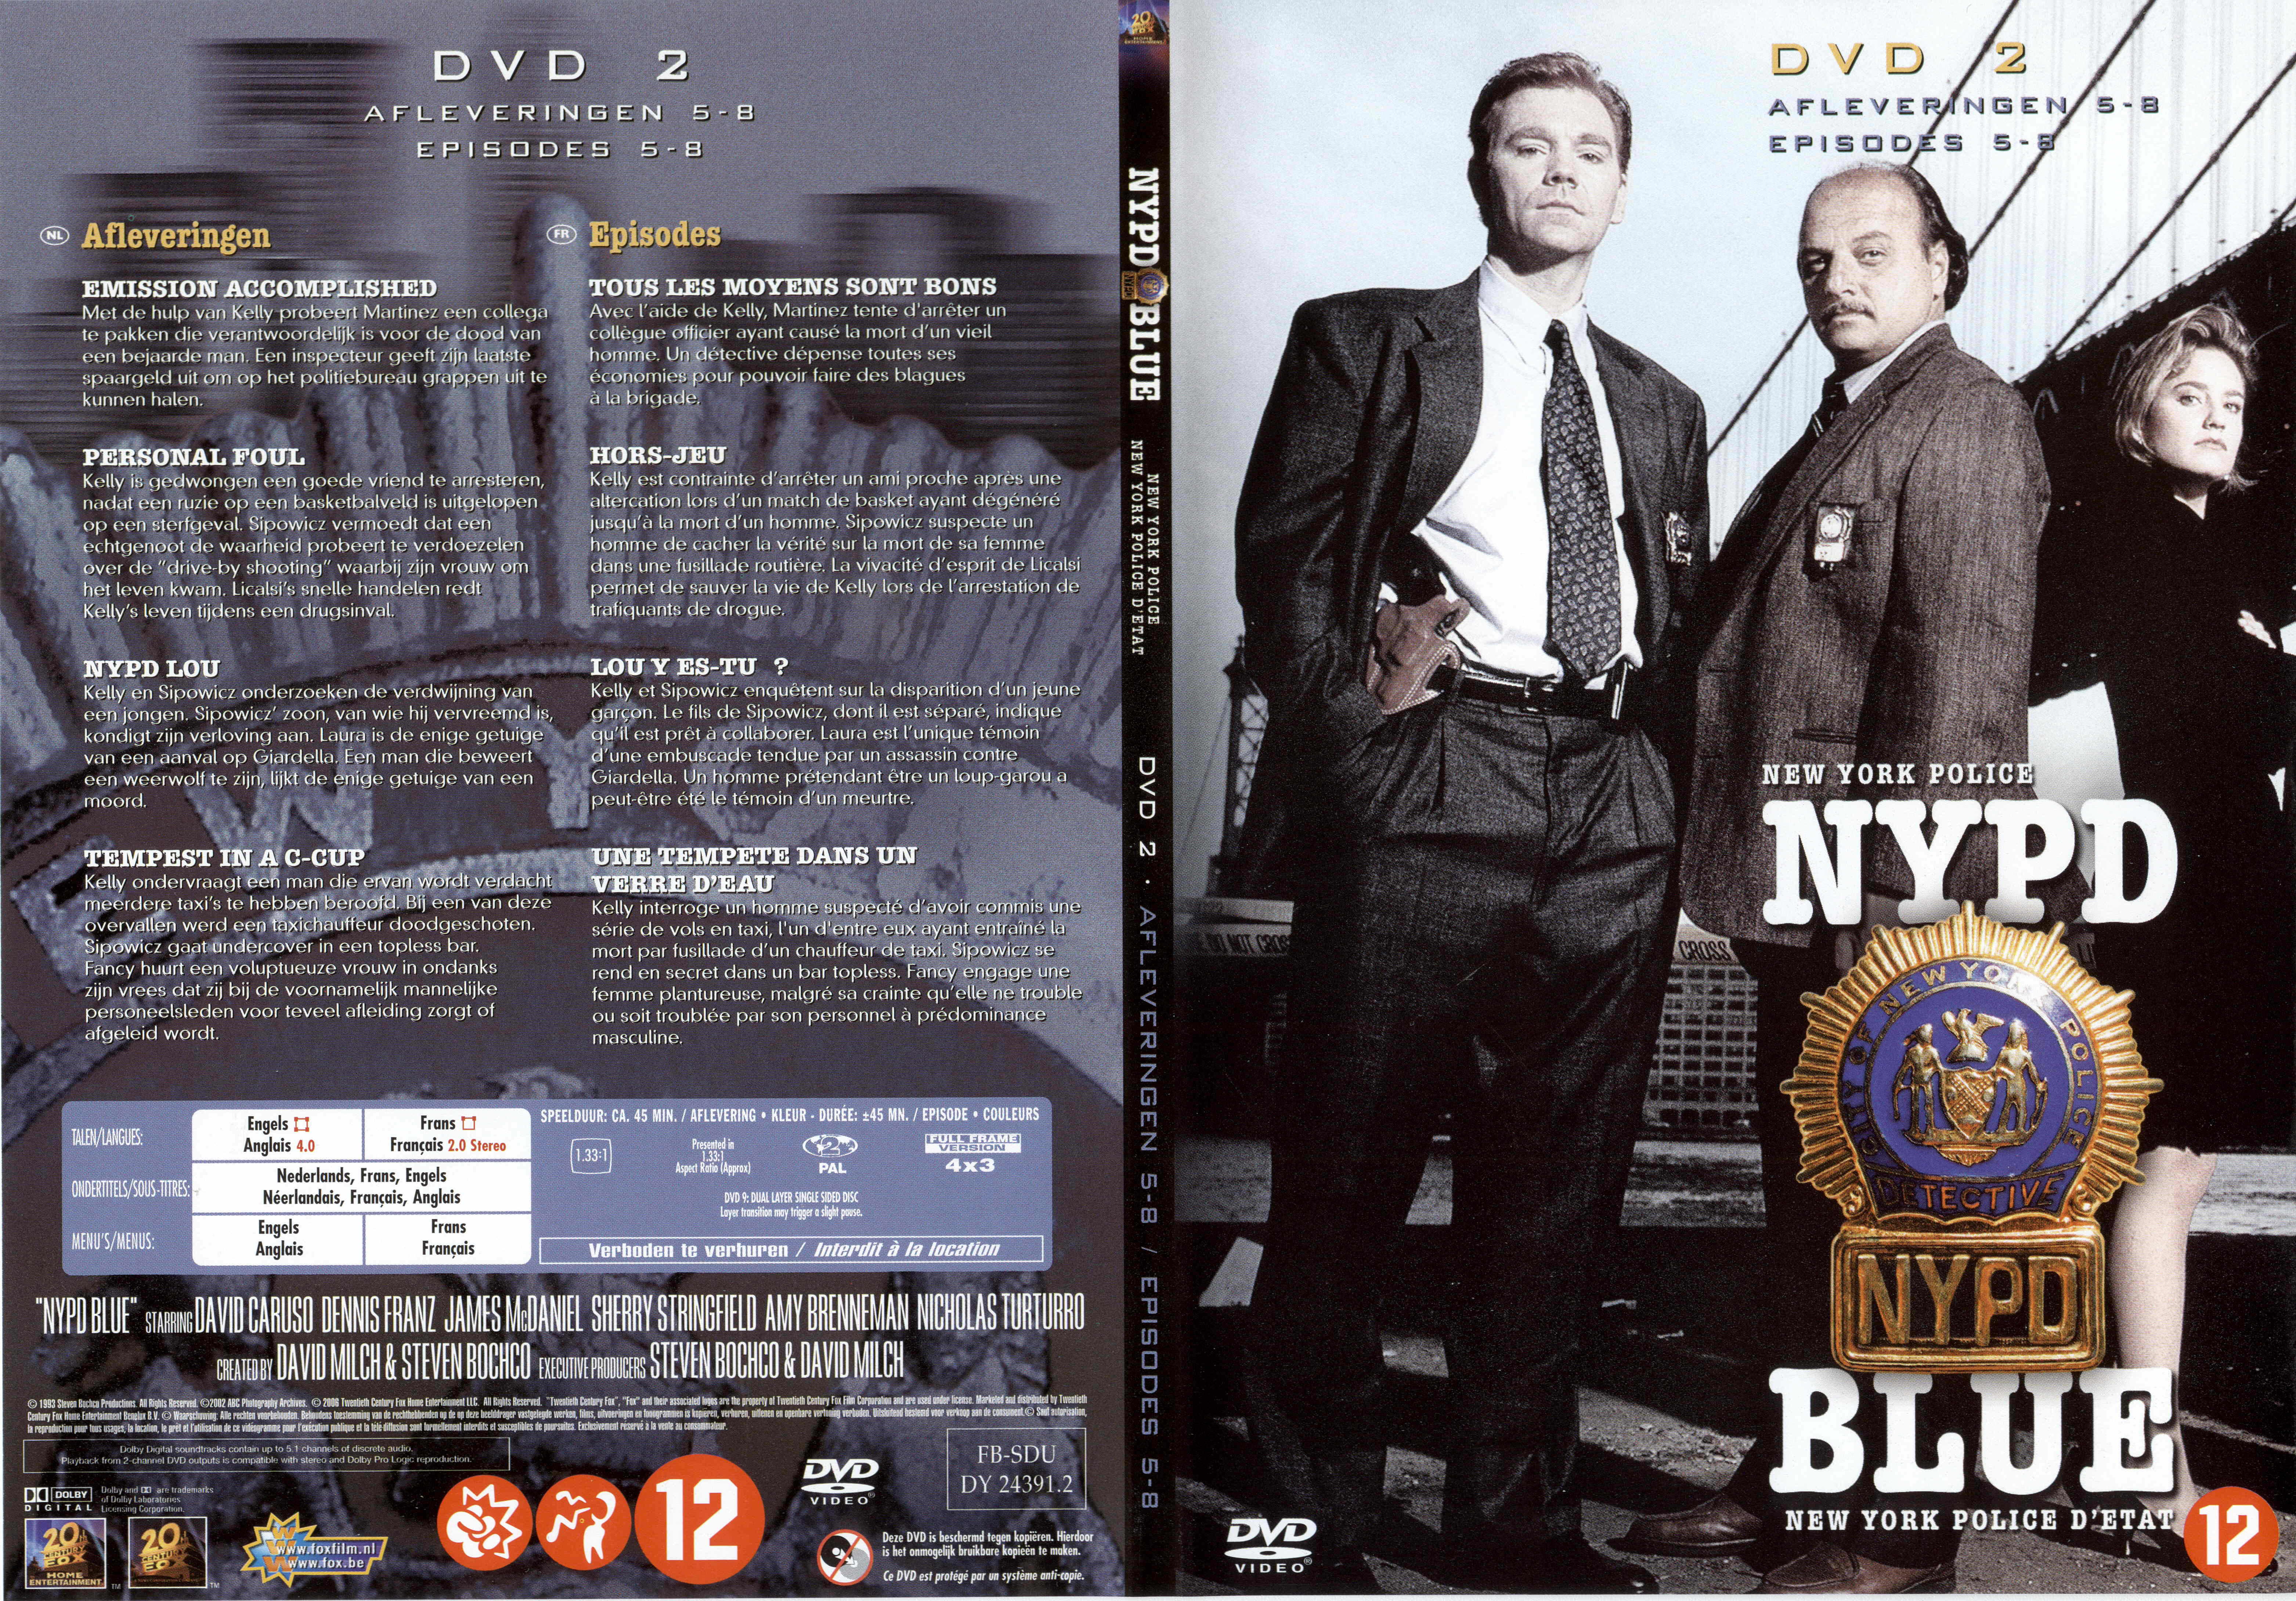 Jaquette DVD NYPD Blue saison 01 dvd 02 v2